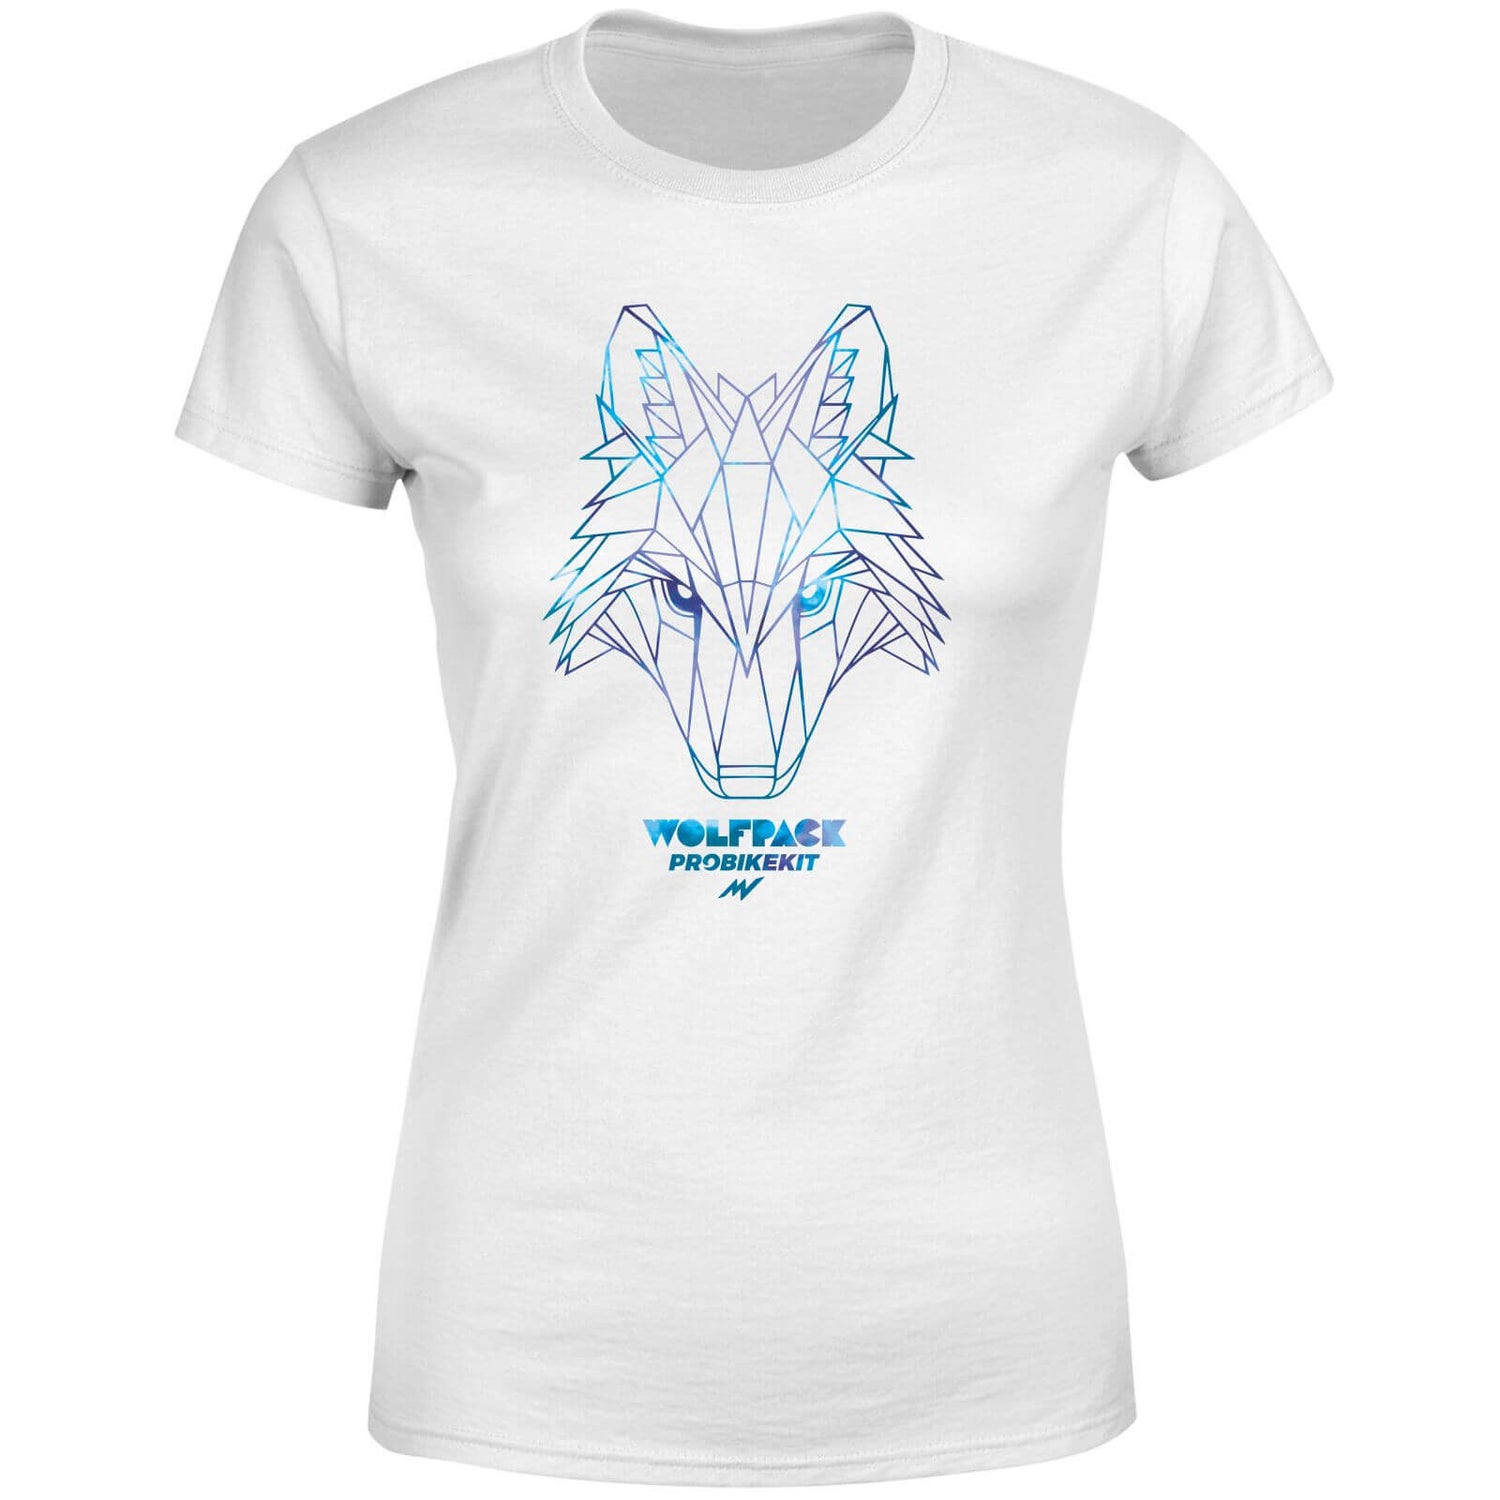 Wolfpack Galaxy Women's T-Shirt - White